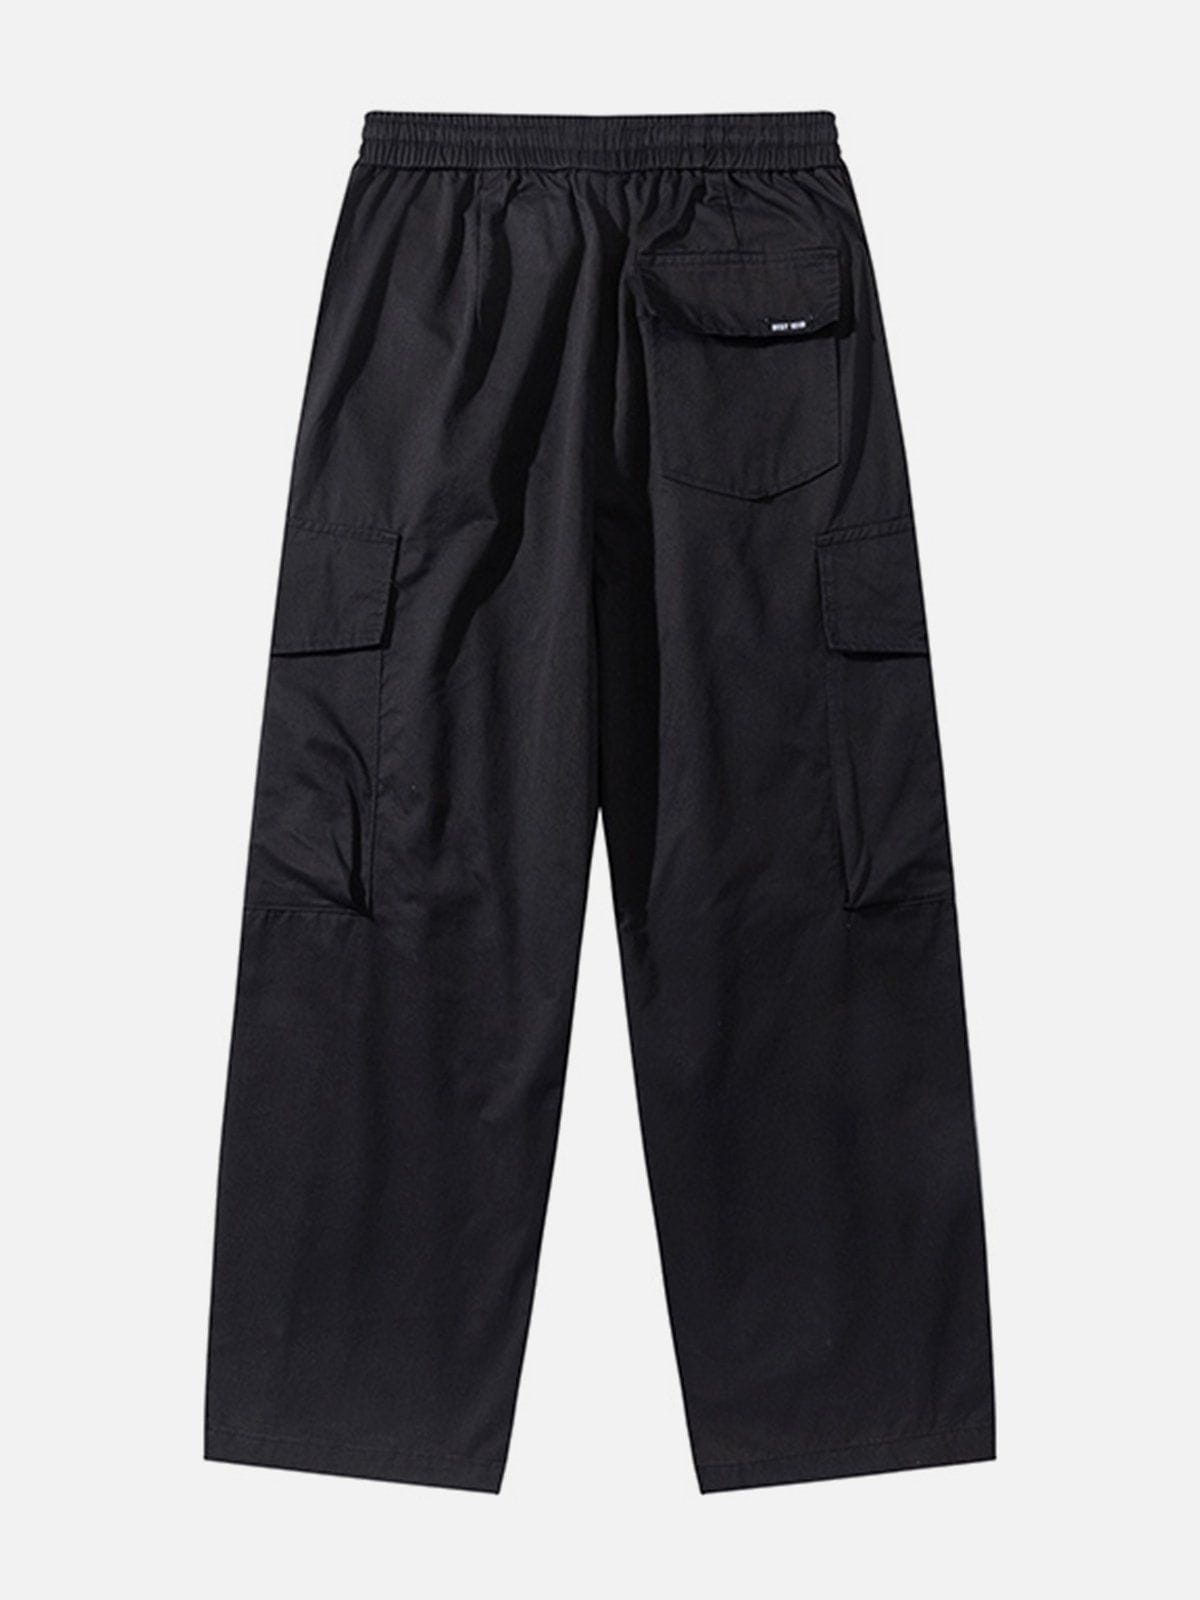 Sneakerland® - Multi-Pocket Straight Cargo Pants